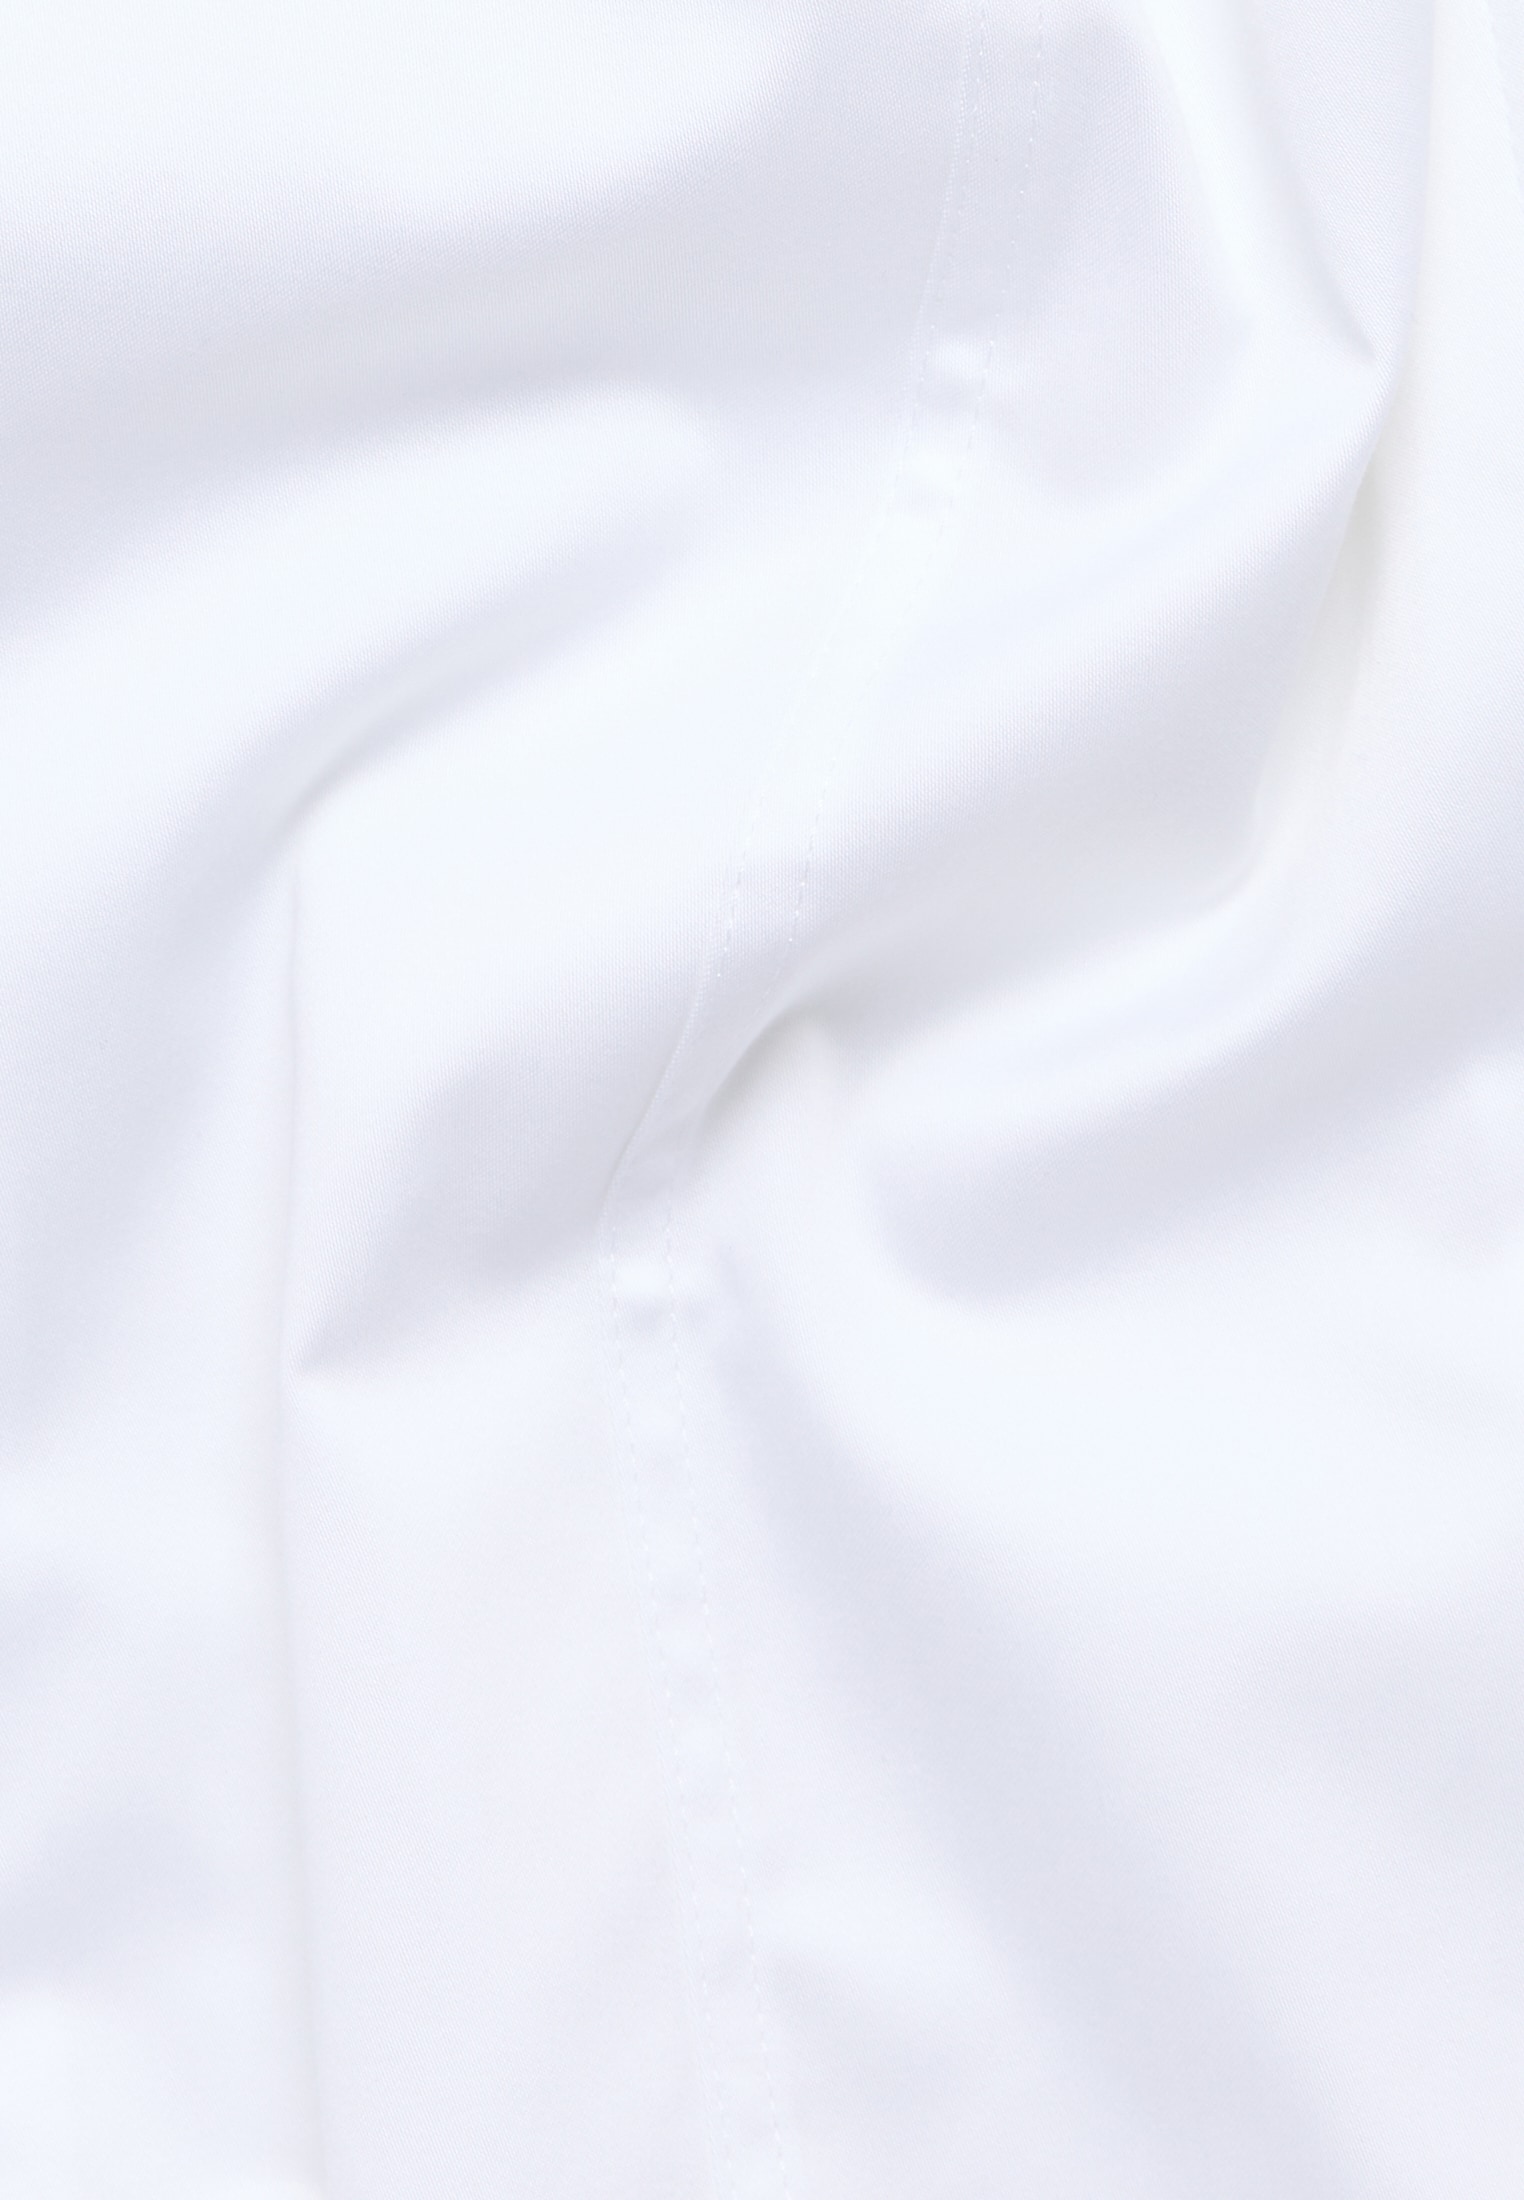 Satin Shirt Blouse in white plain